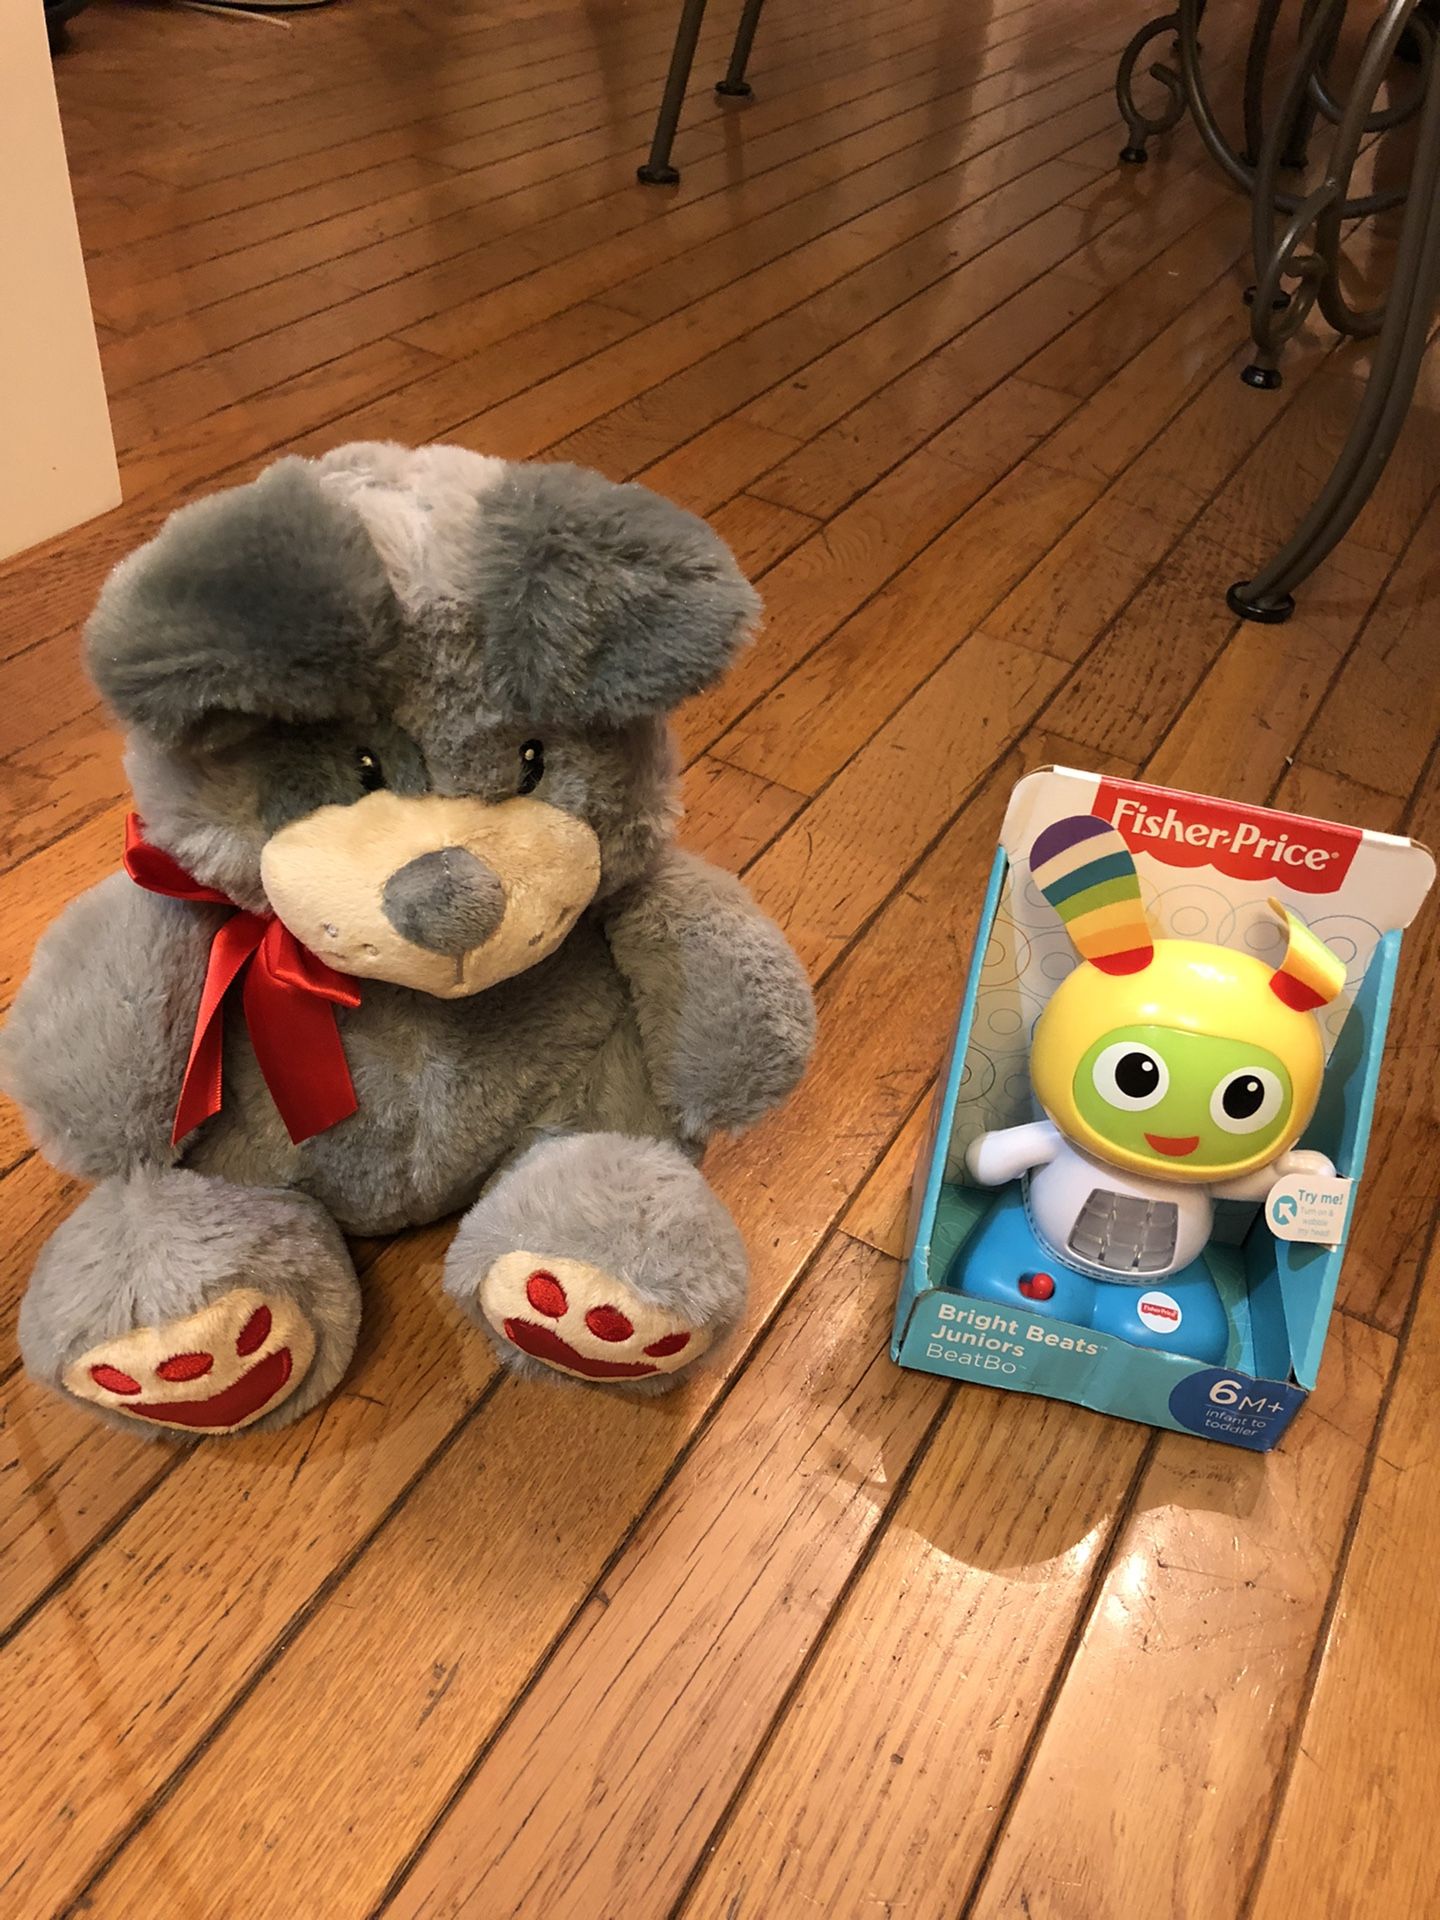 New stuffed animal and Bright beats Junior